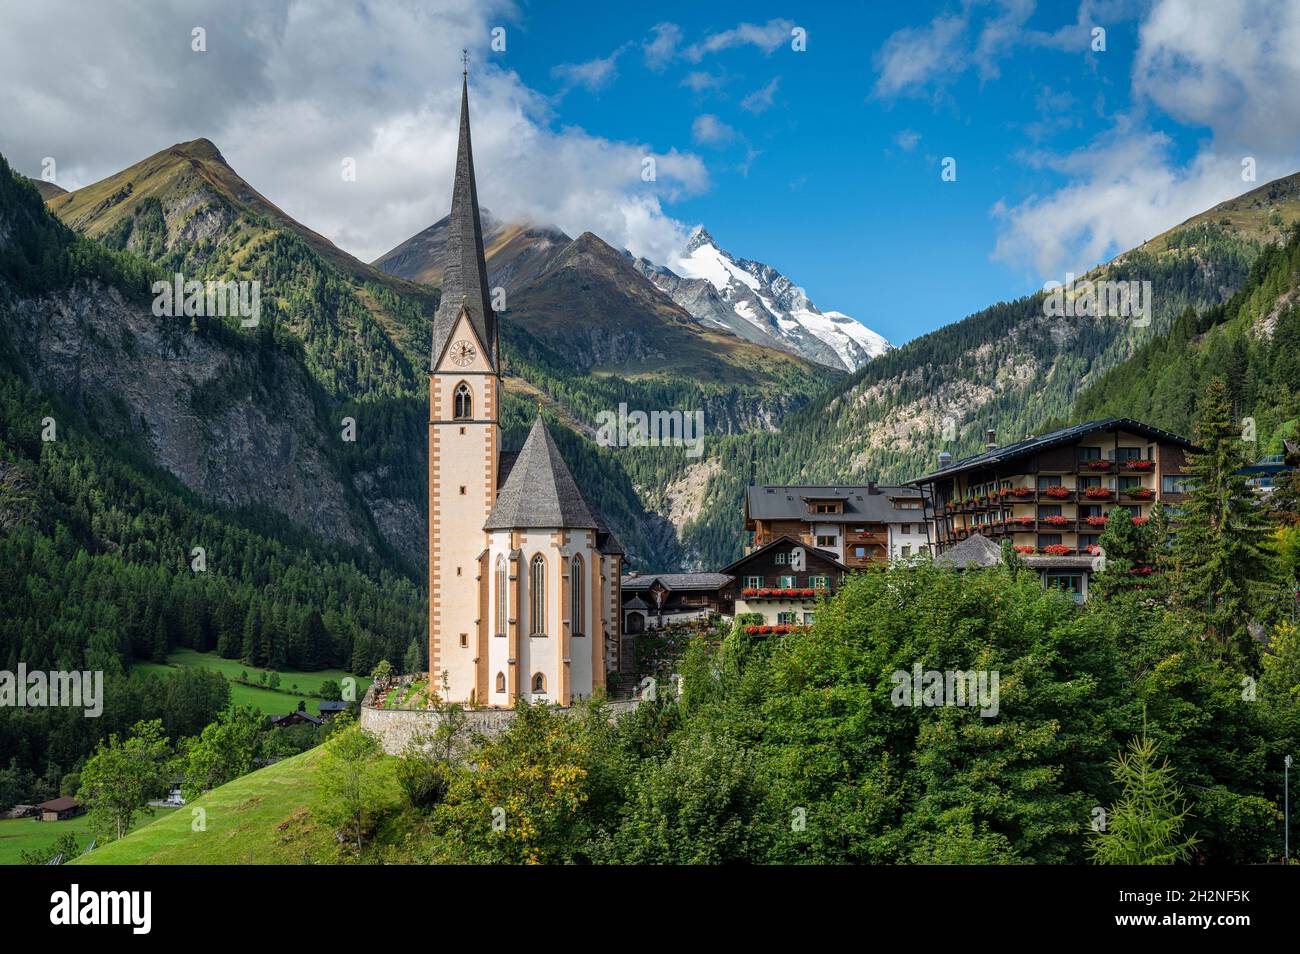 Austria, Carinthia, Heiligenblut am Grossglockner, Mountain village with Saint Vincent Church in center Stock Photo